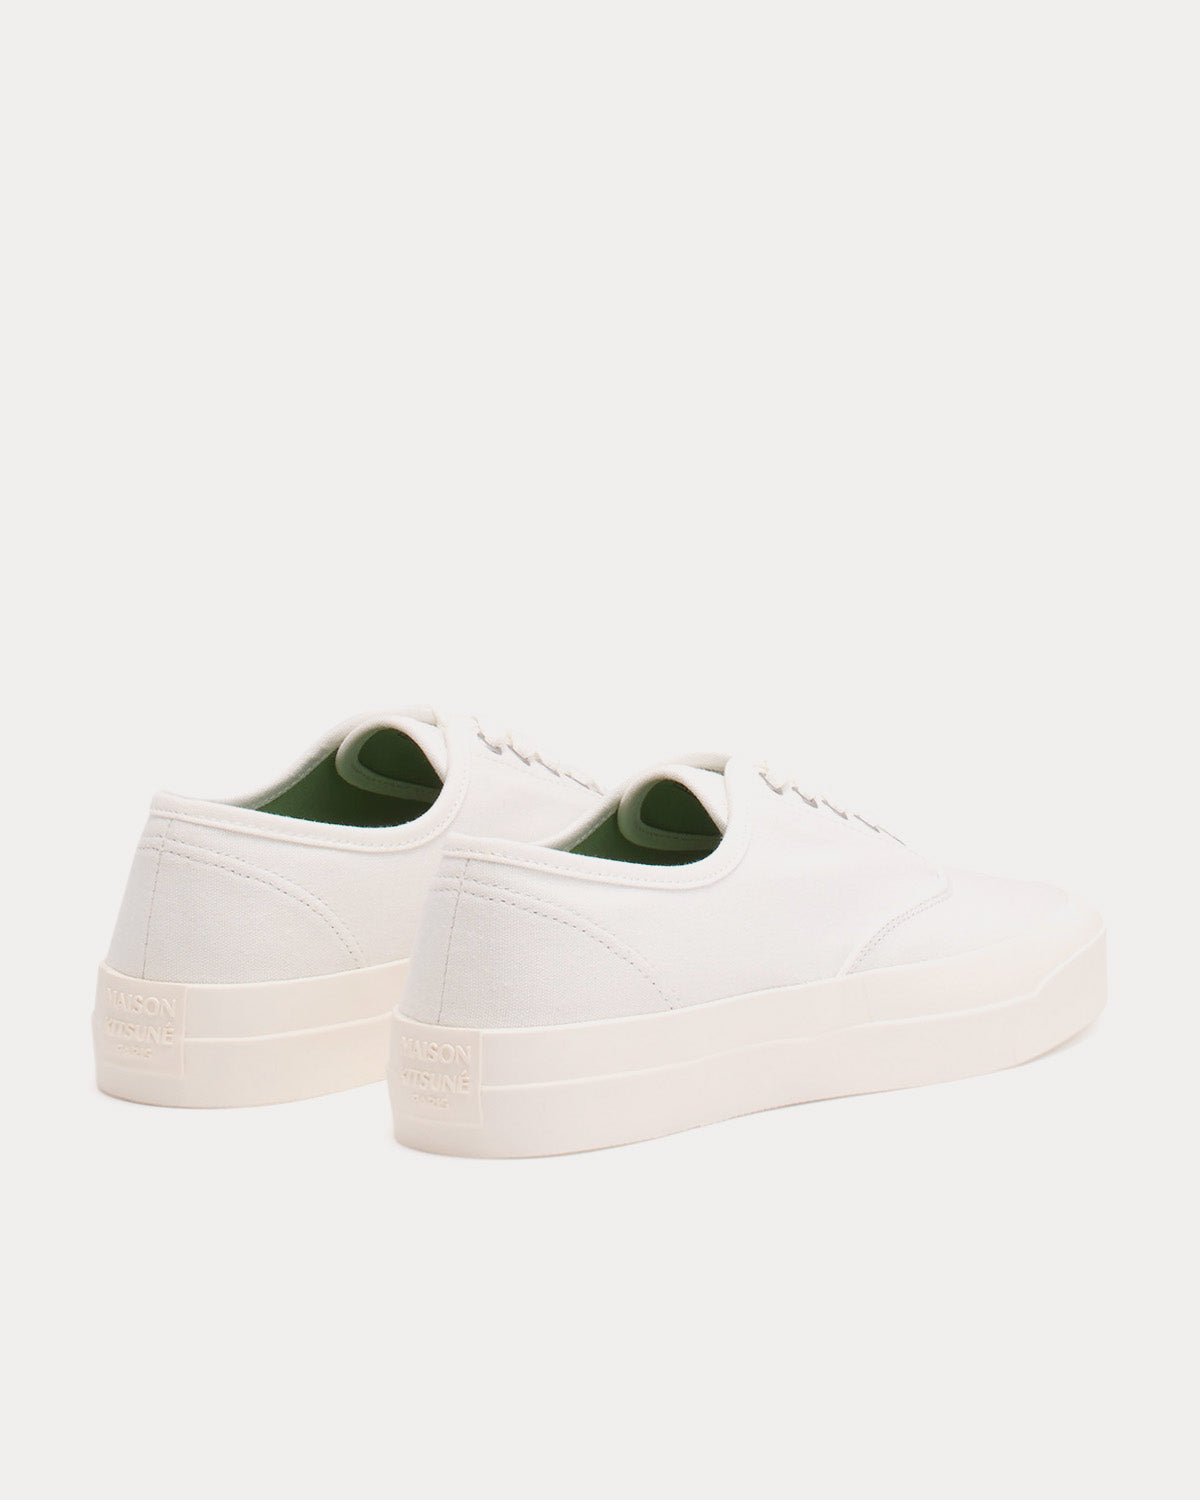 Maison Kitsuné - Laced Canvas White Low Top Sneakers